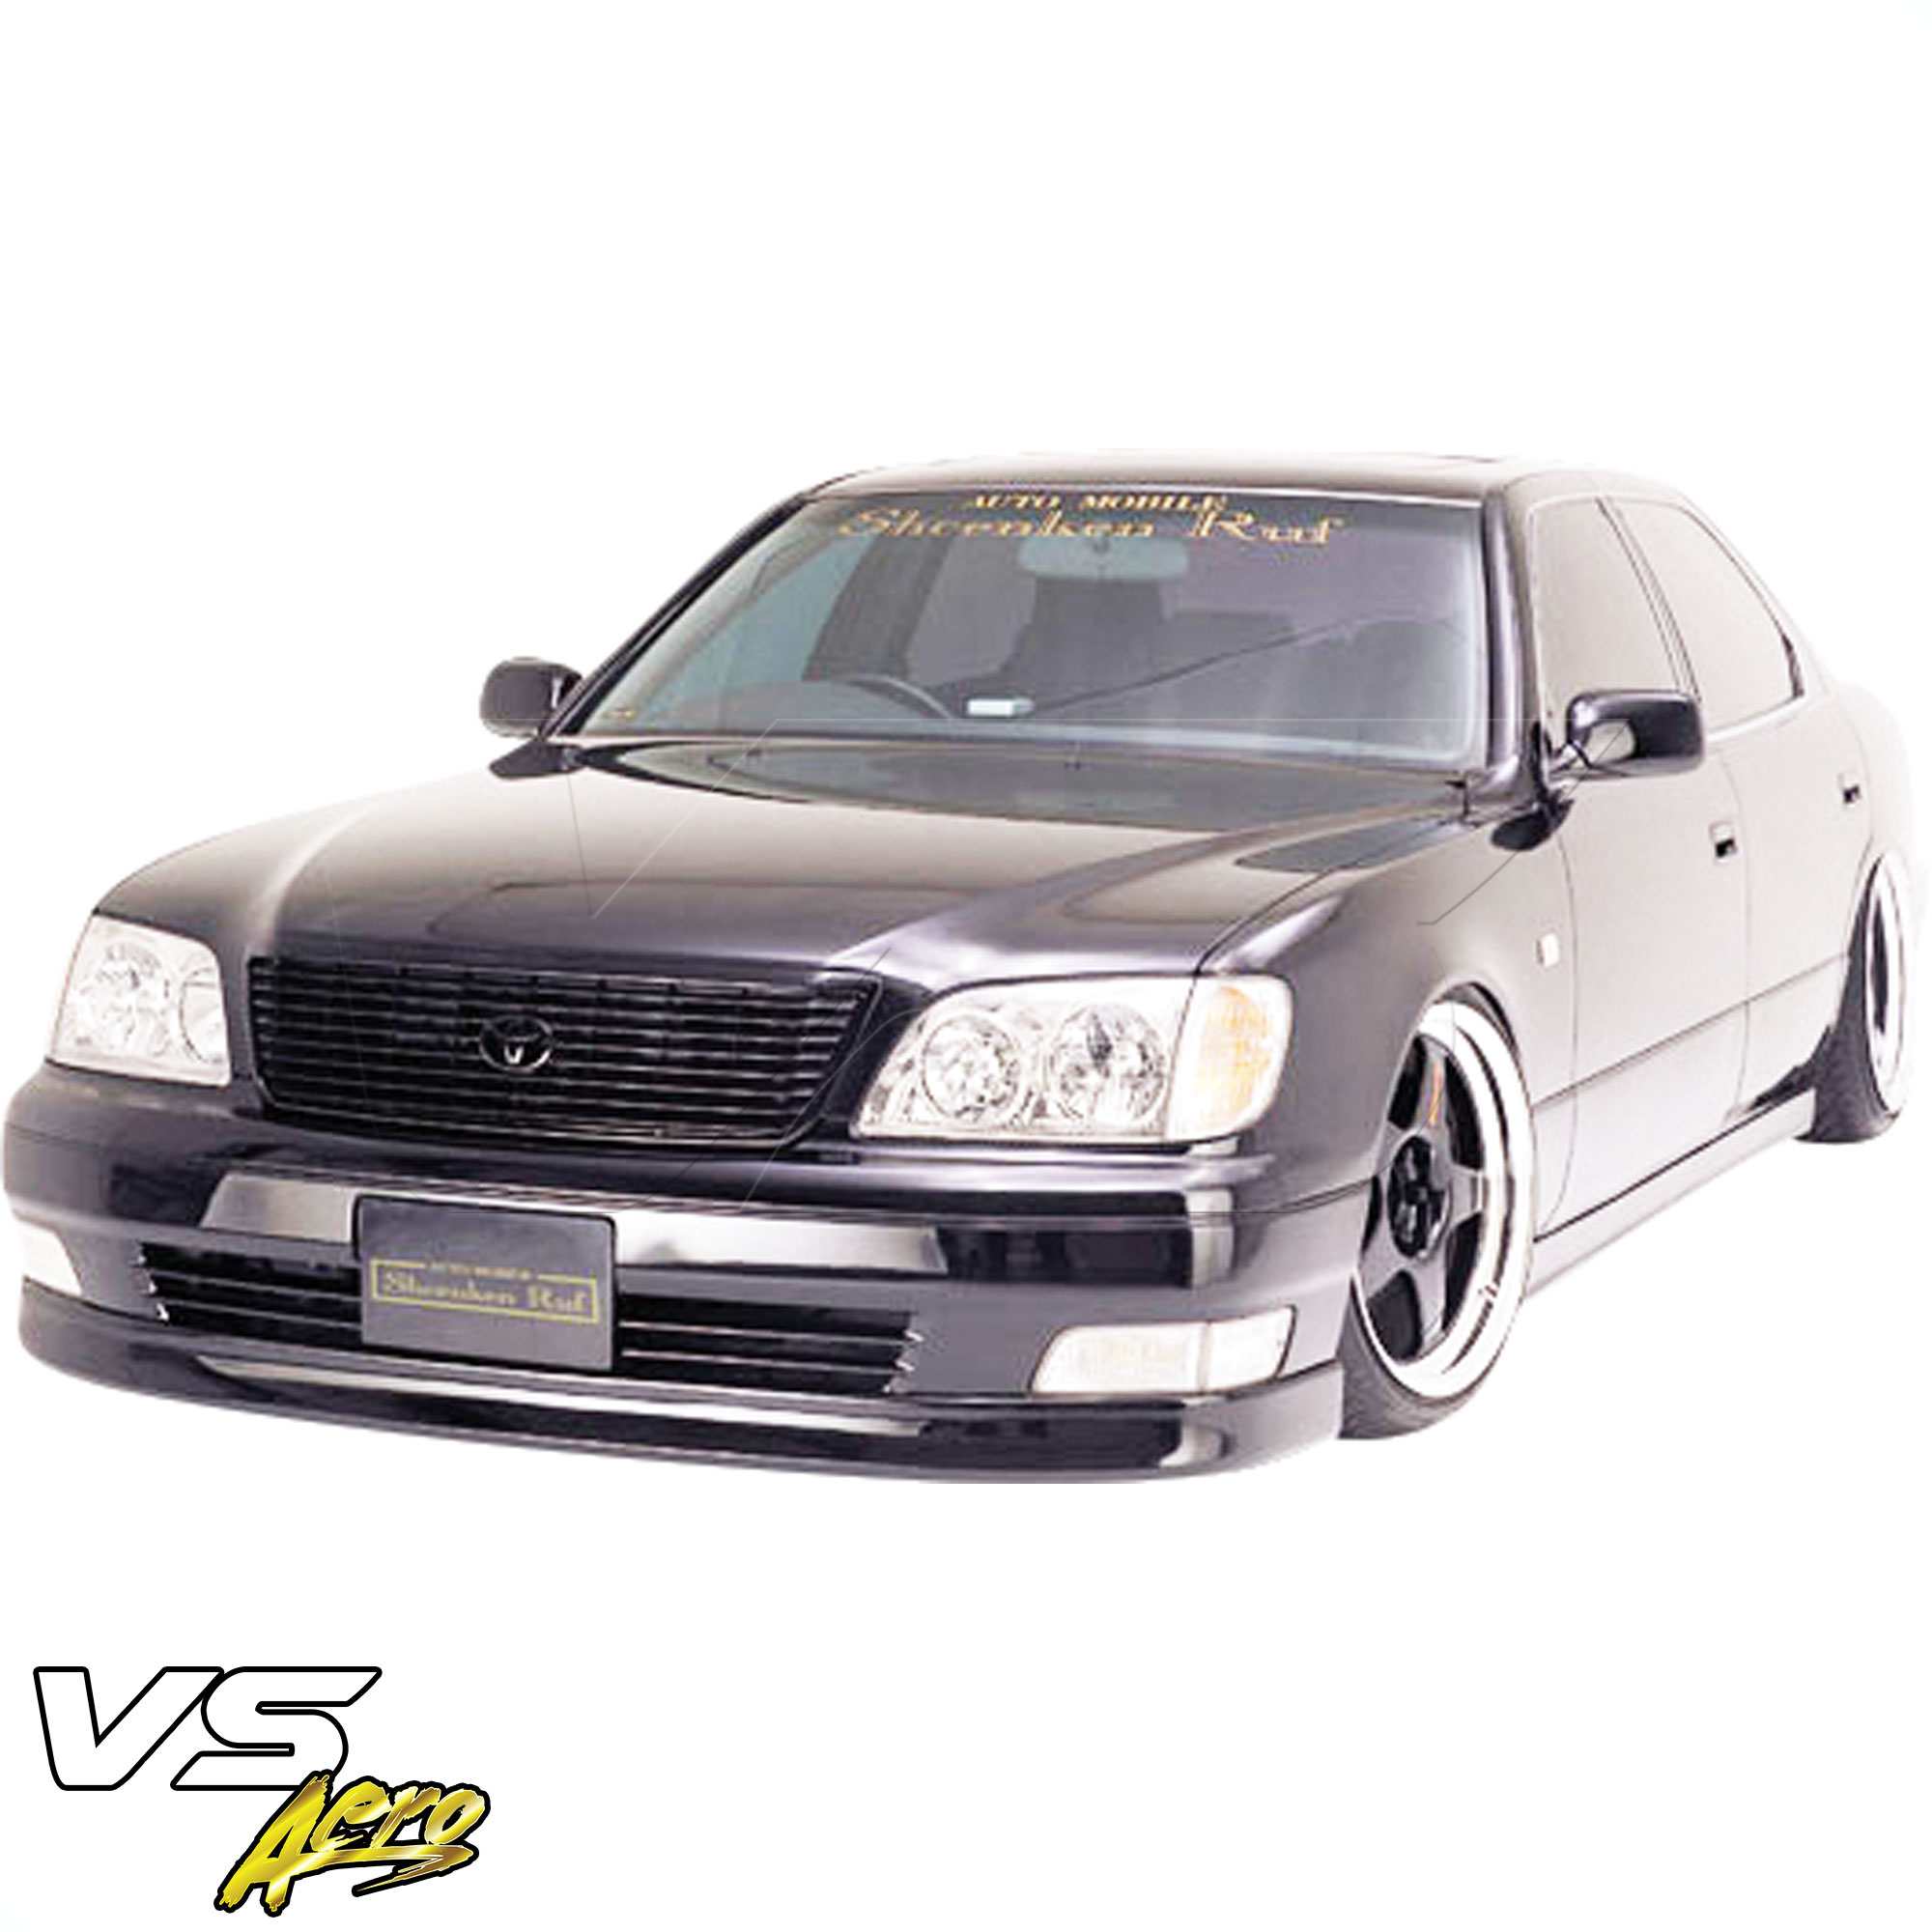 VSaero FRP FKON Front Lip Valance > Lexus LS Series LS400 UCF21 1998-2000 - Image 5